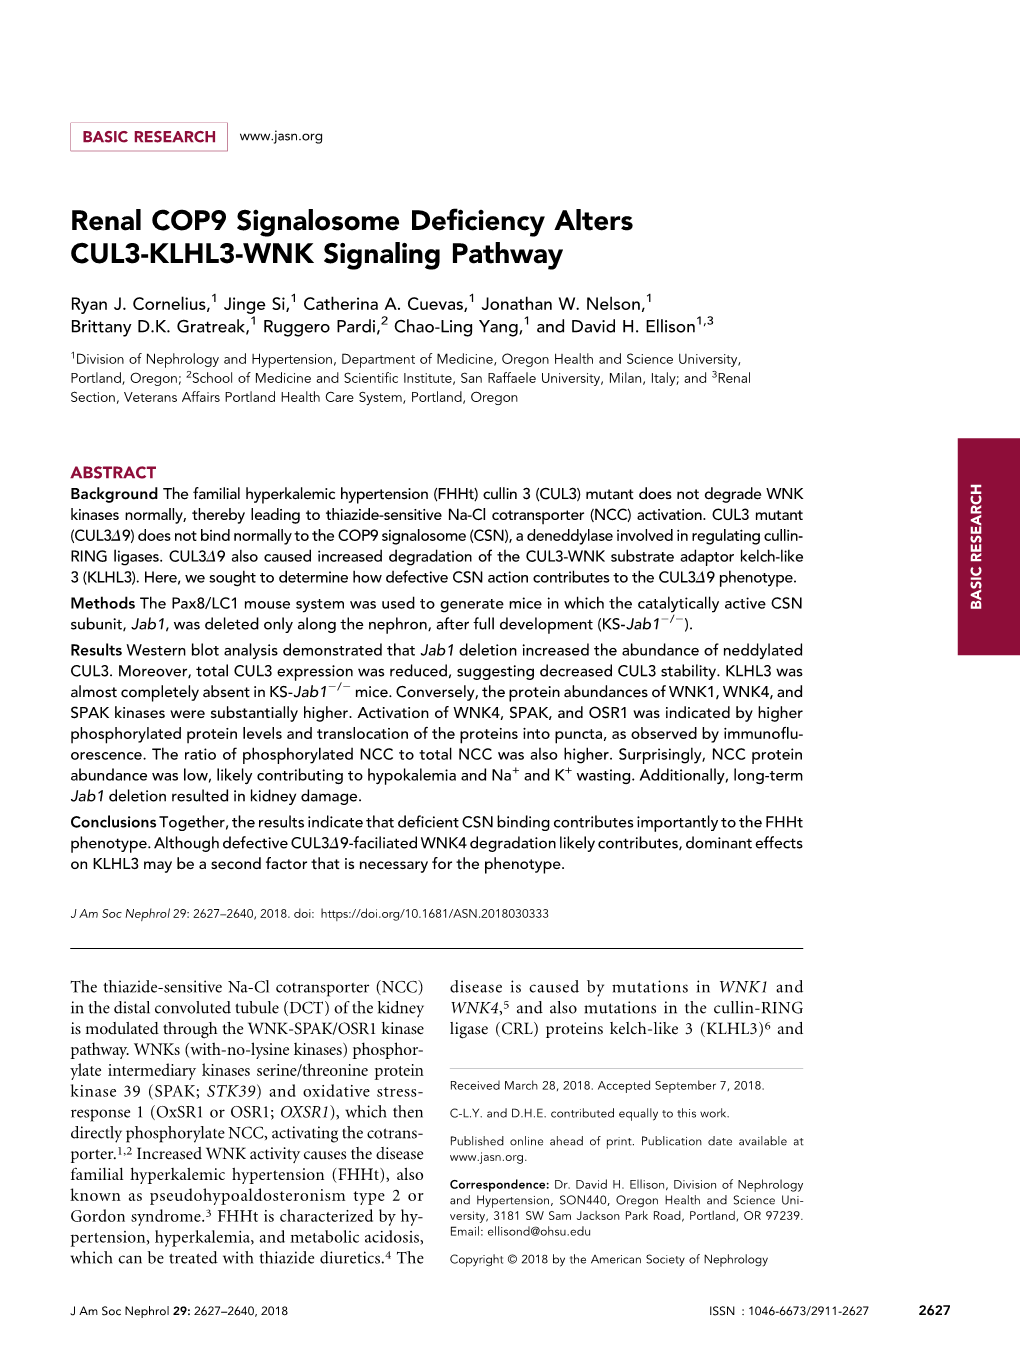 Renal COP9 Signalosome Deficiency Alters CUL3-KLHL3-WNK Signaling